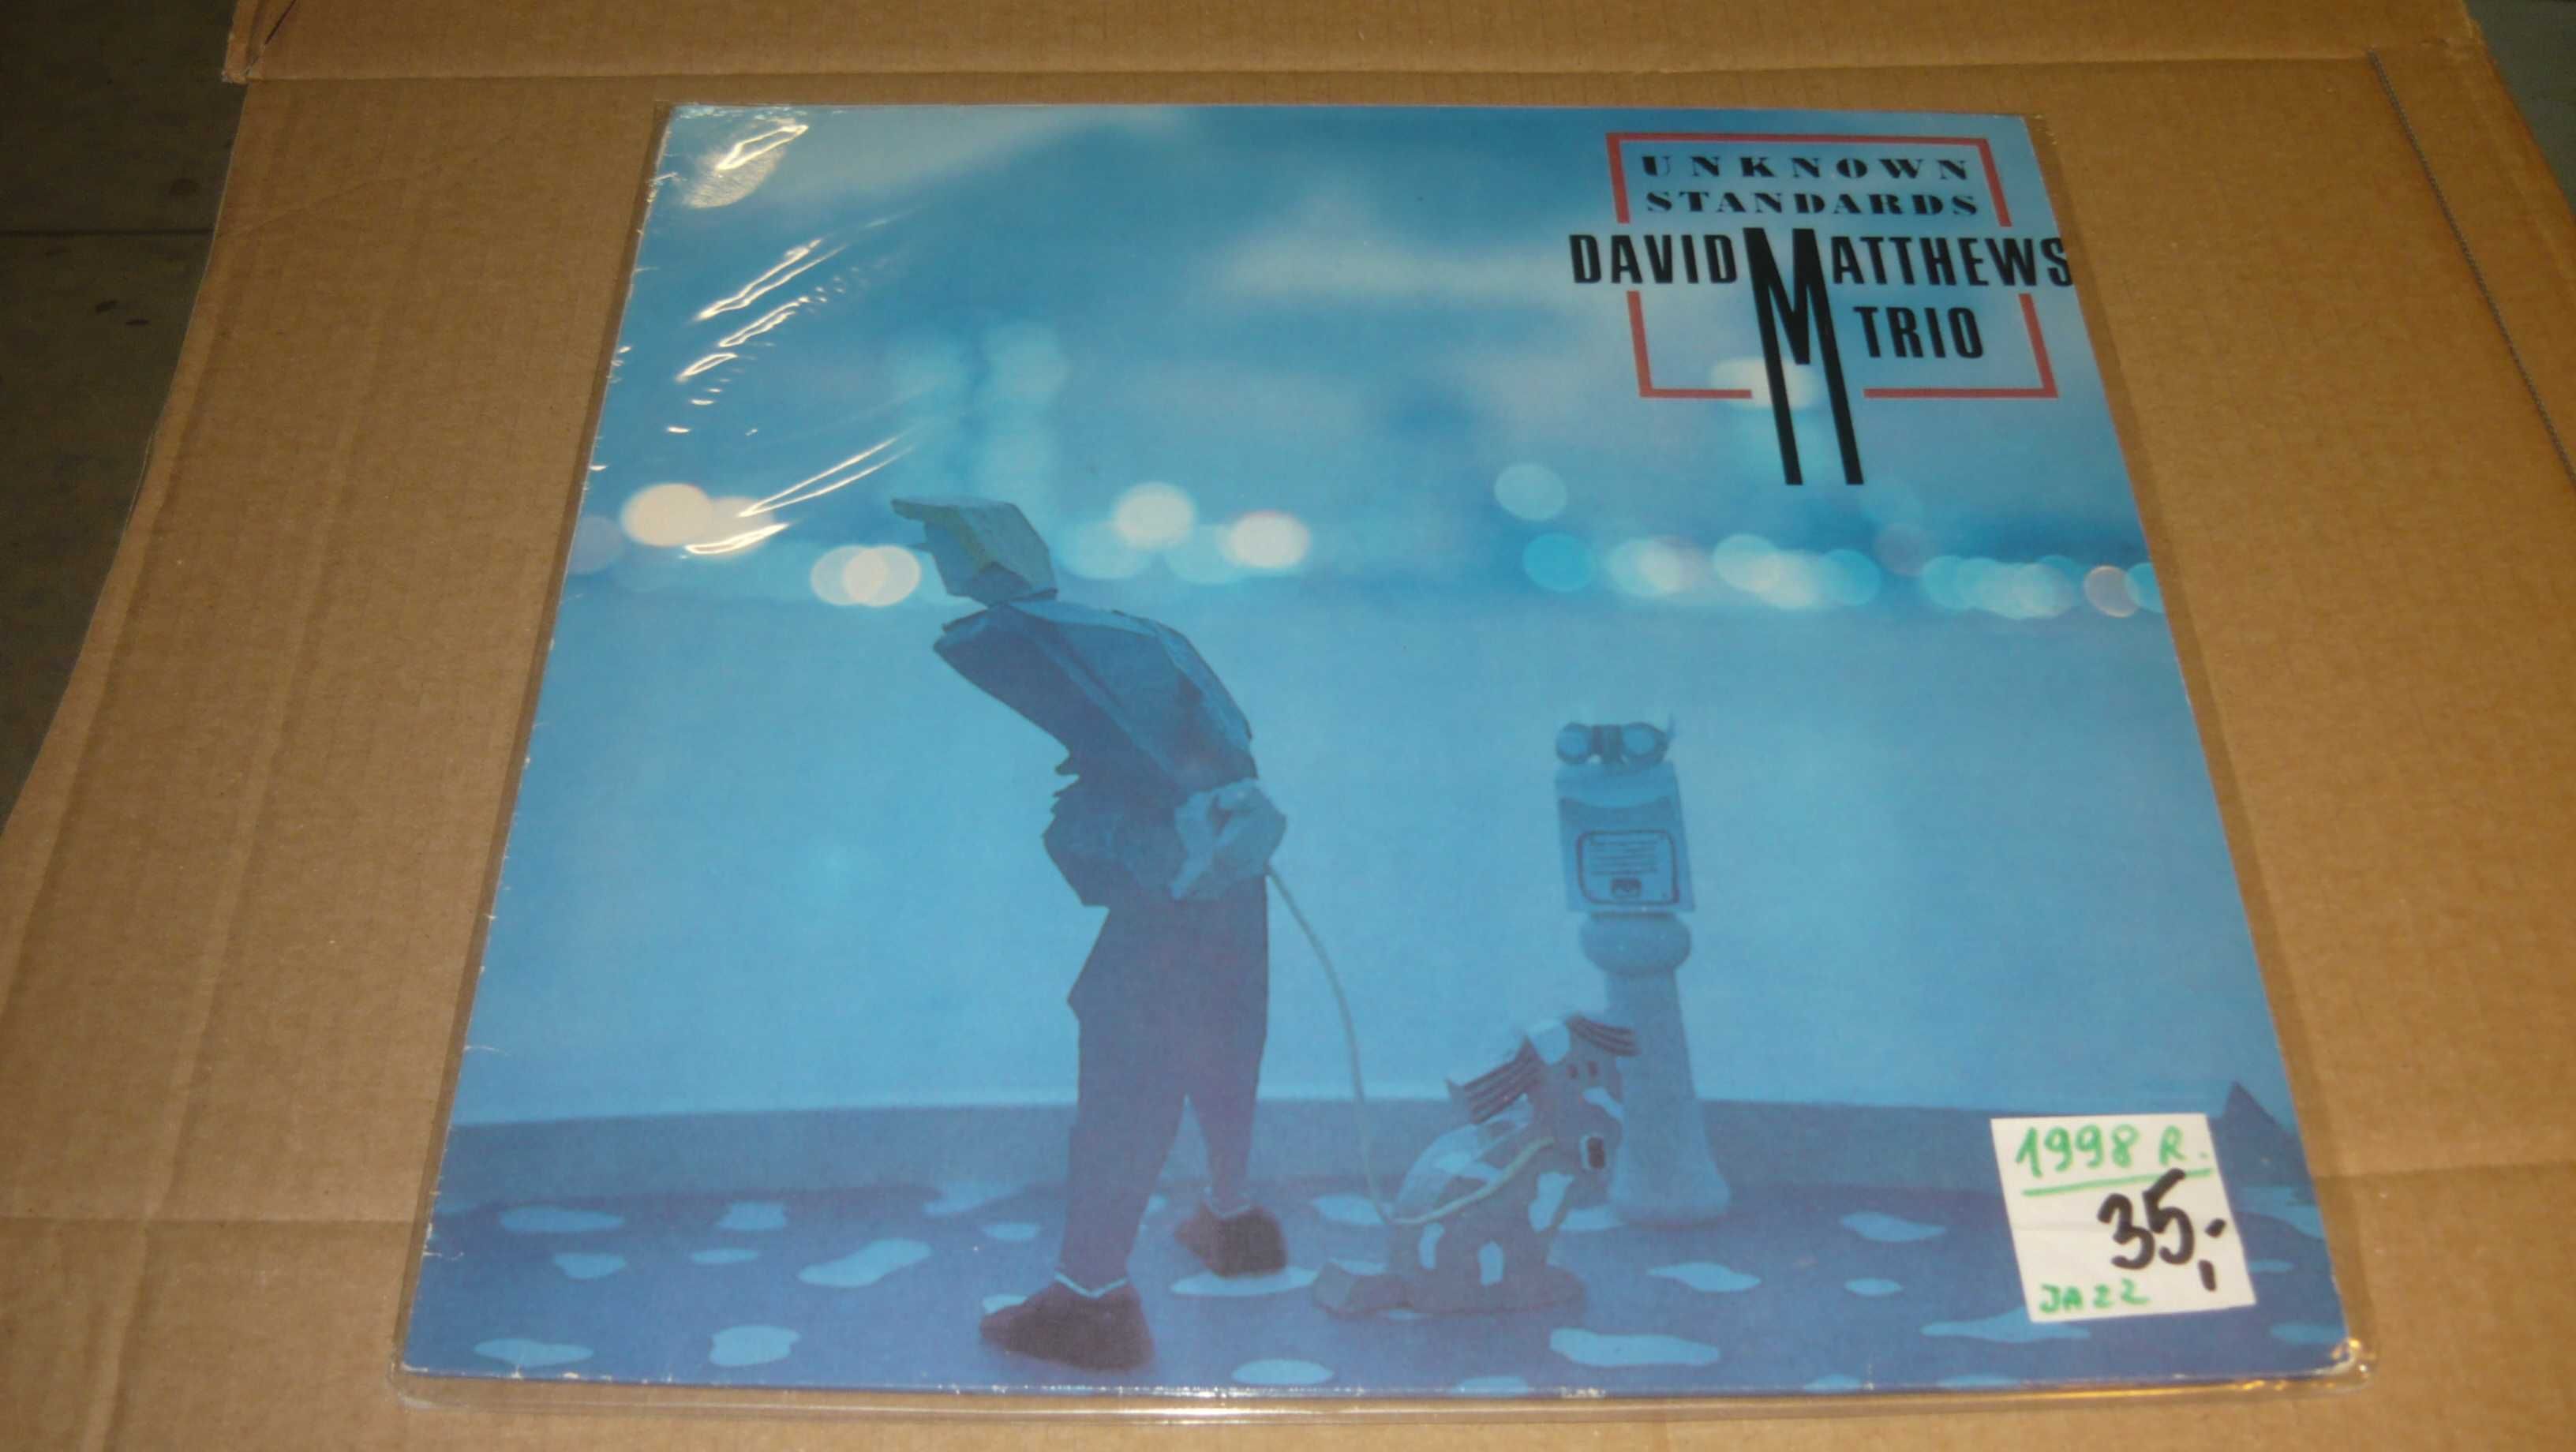 David Matthews Trio LP